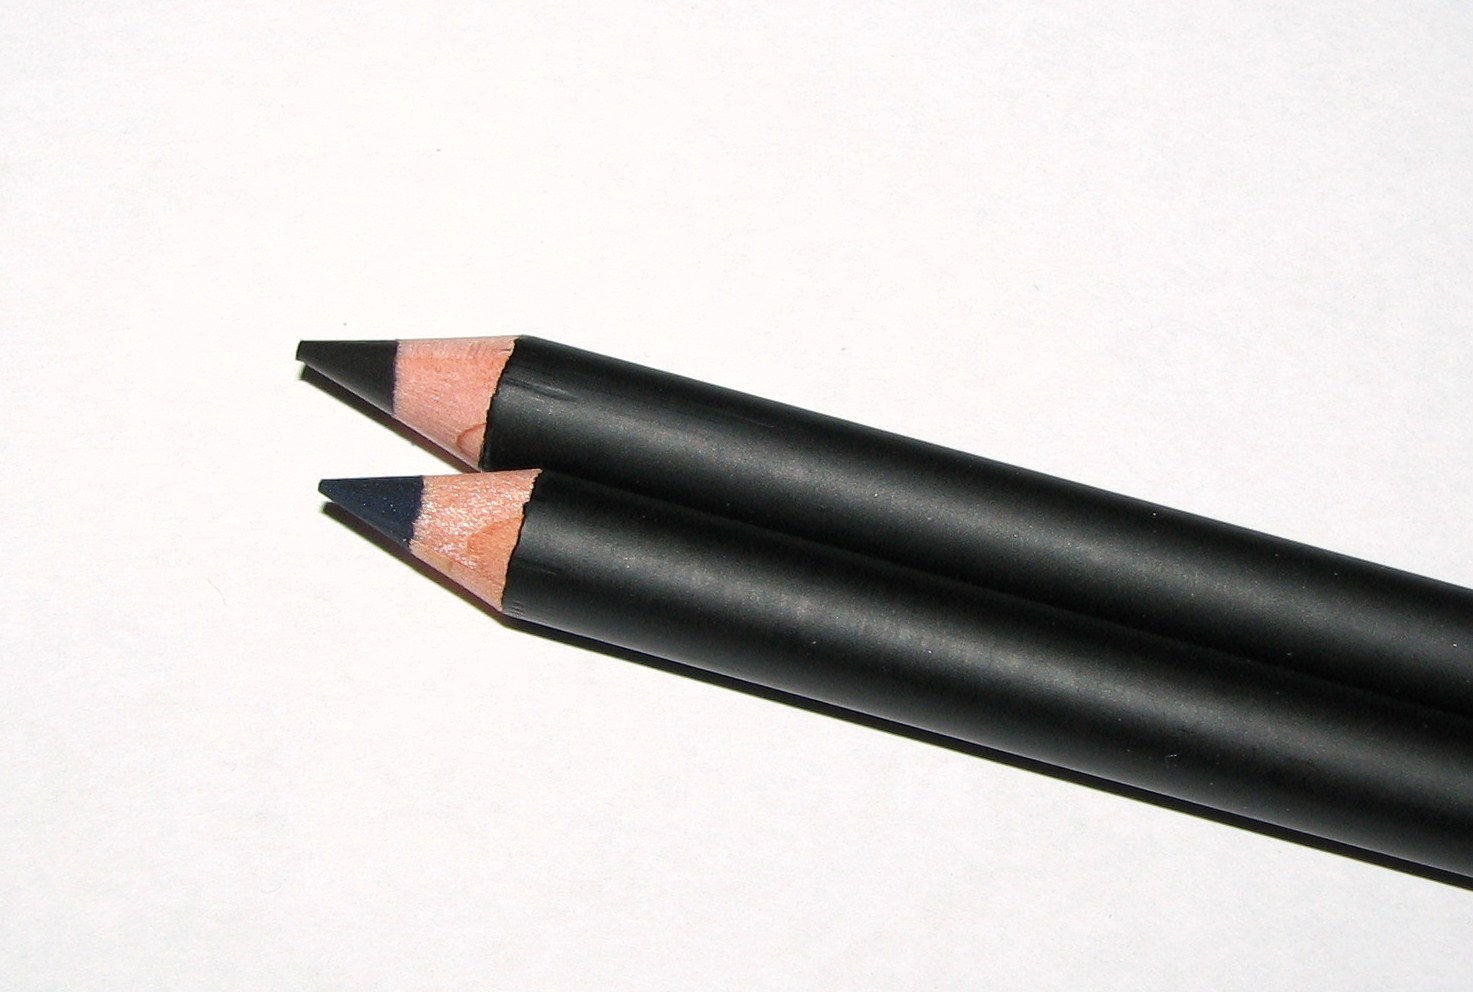 Chanel Peche Cuivre Le Crayon Khol Intense Eye Pencil Review & Swatches